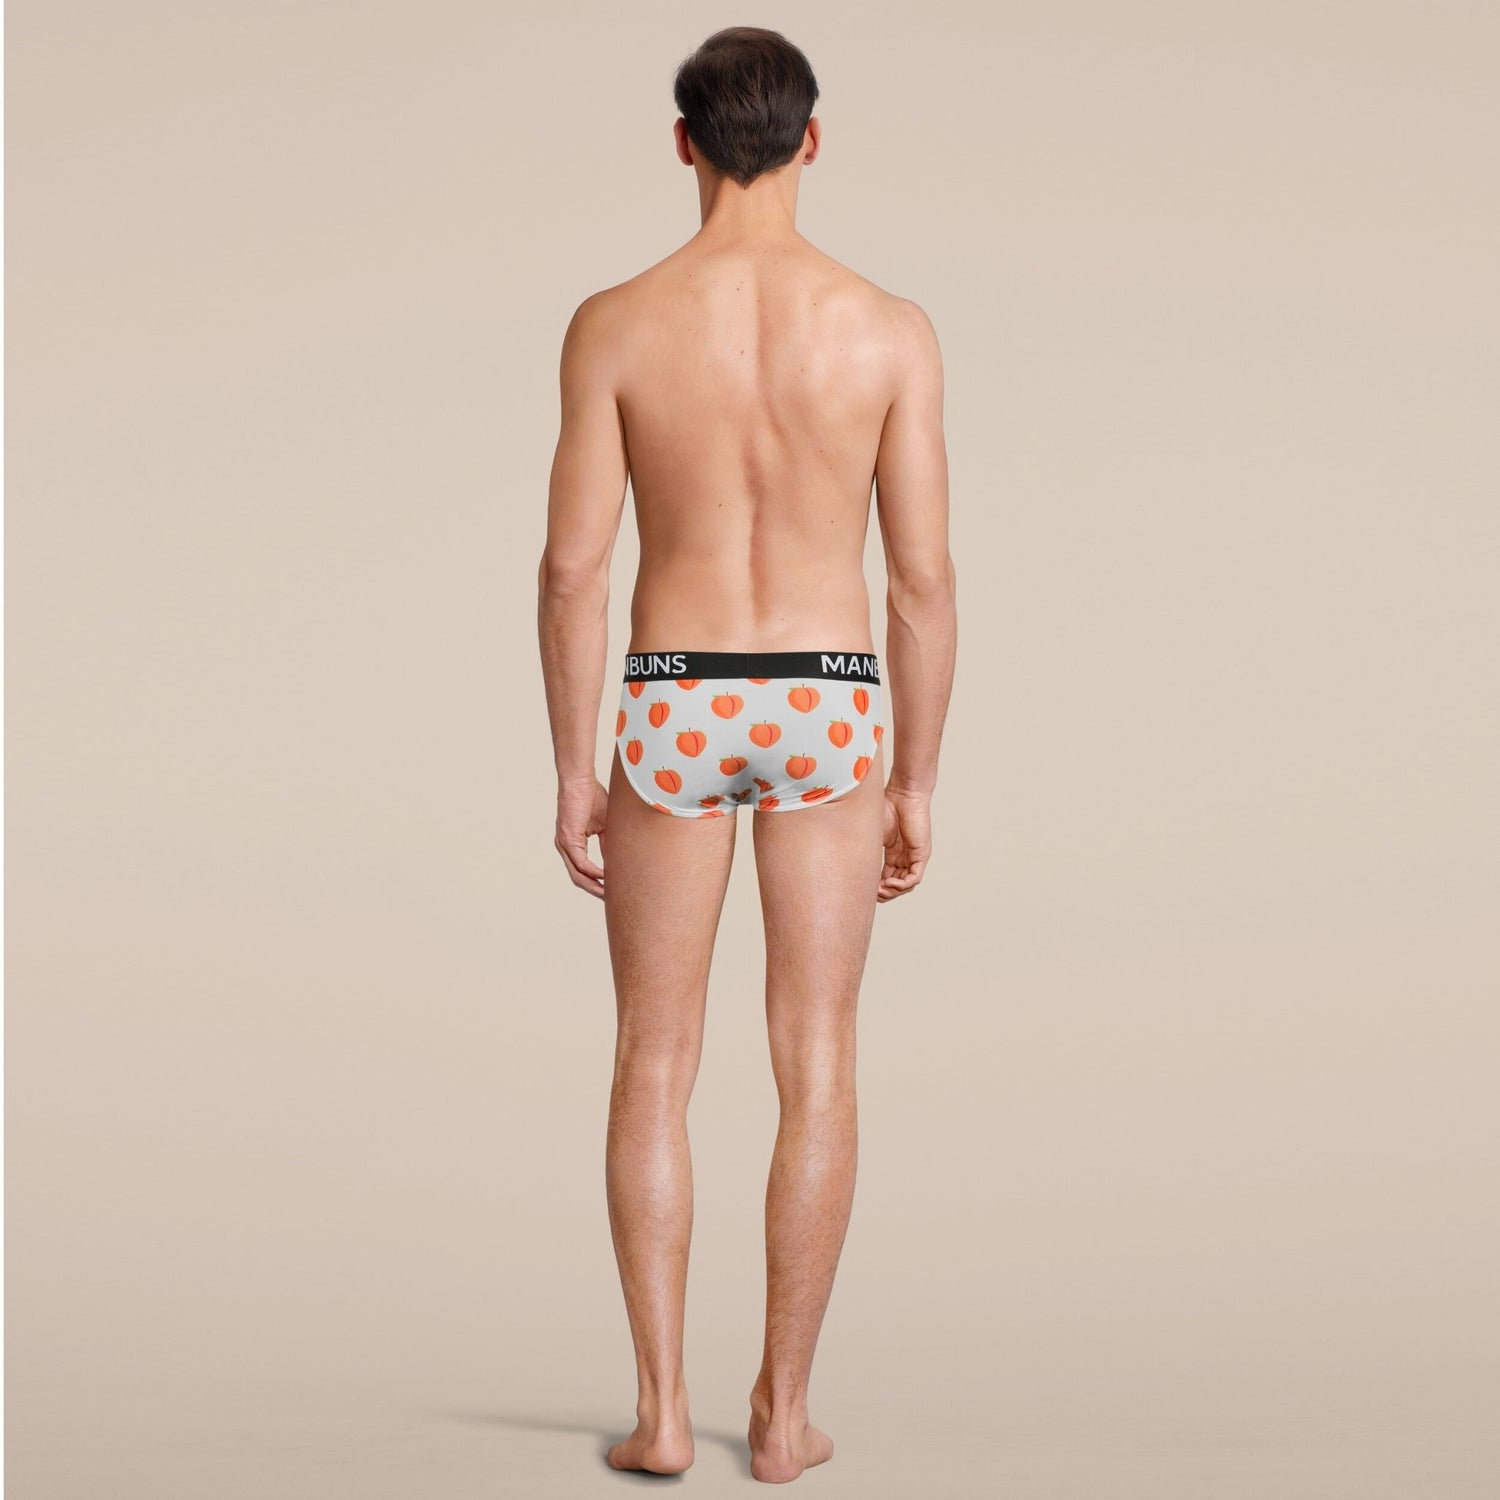 Men's Digital Print Novelty Funny Boxers Briefs, Breathable Comfy